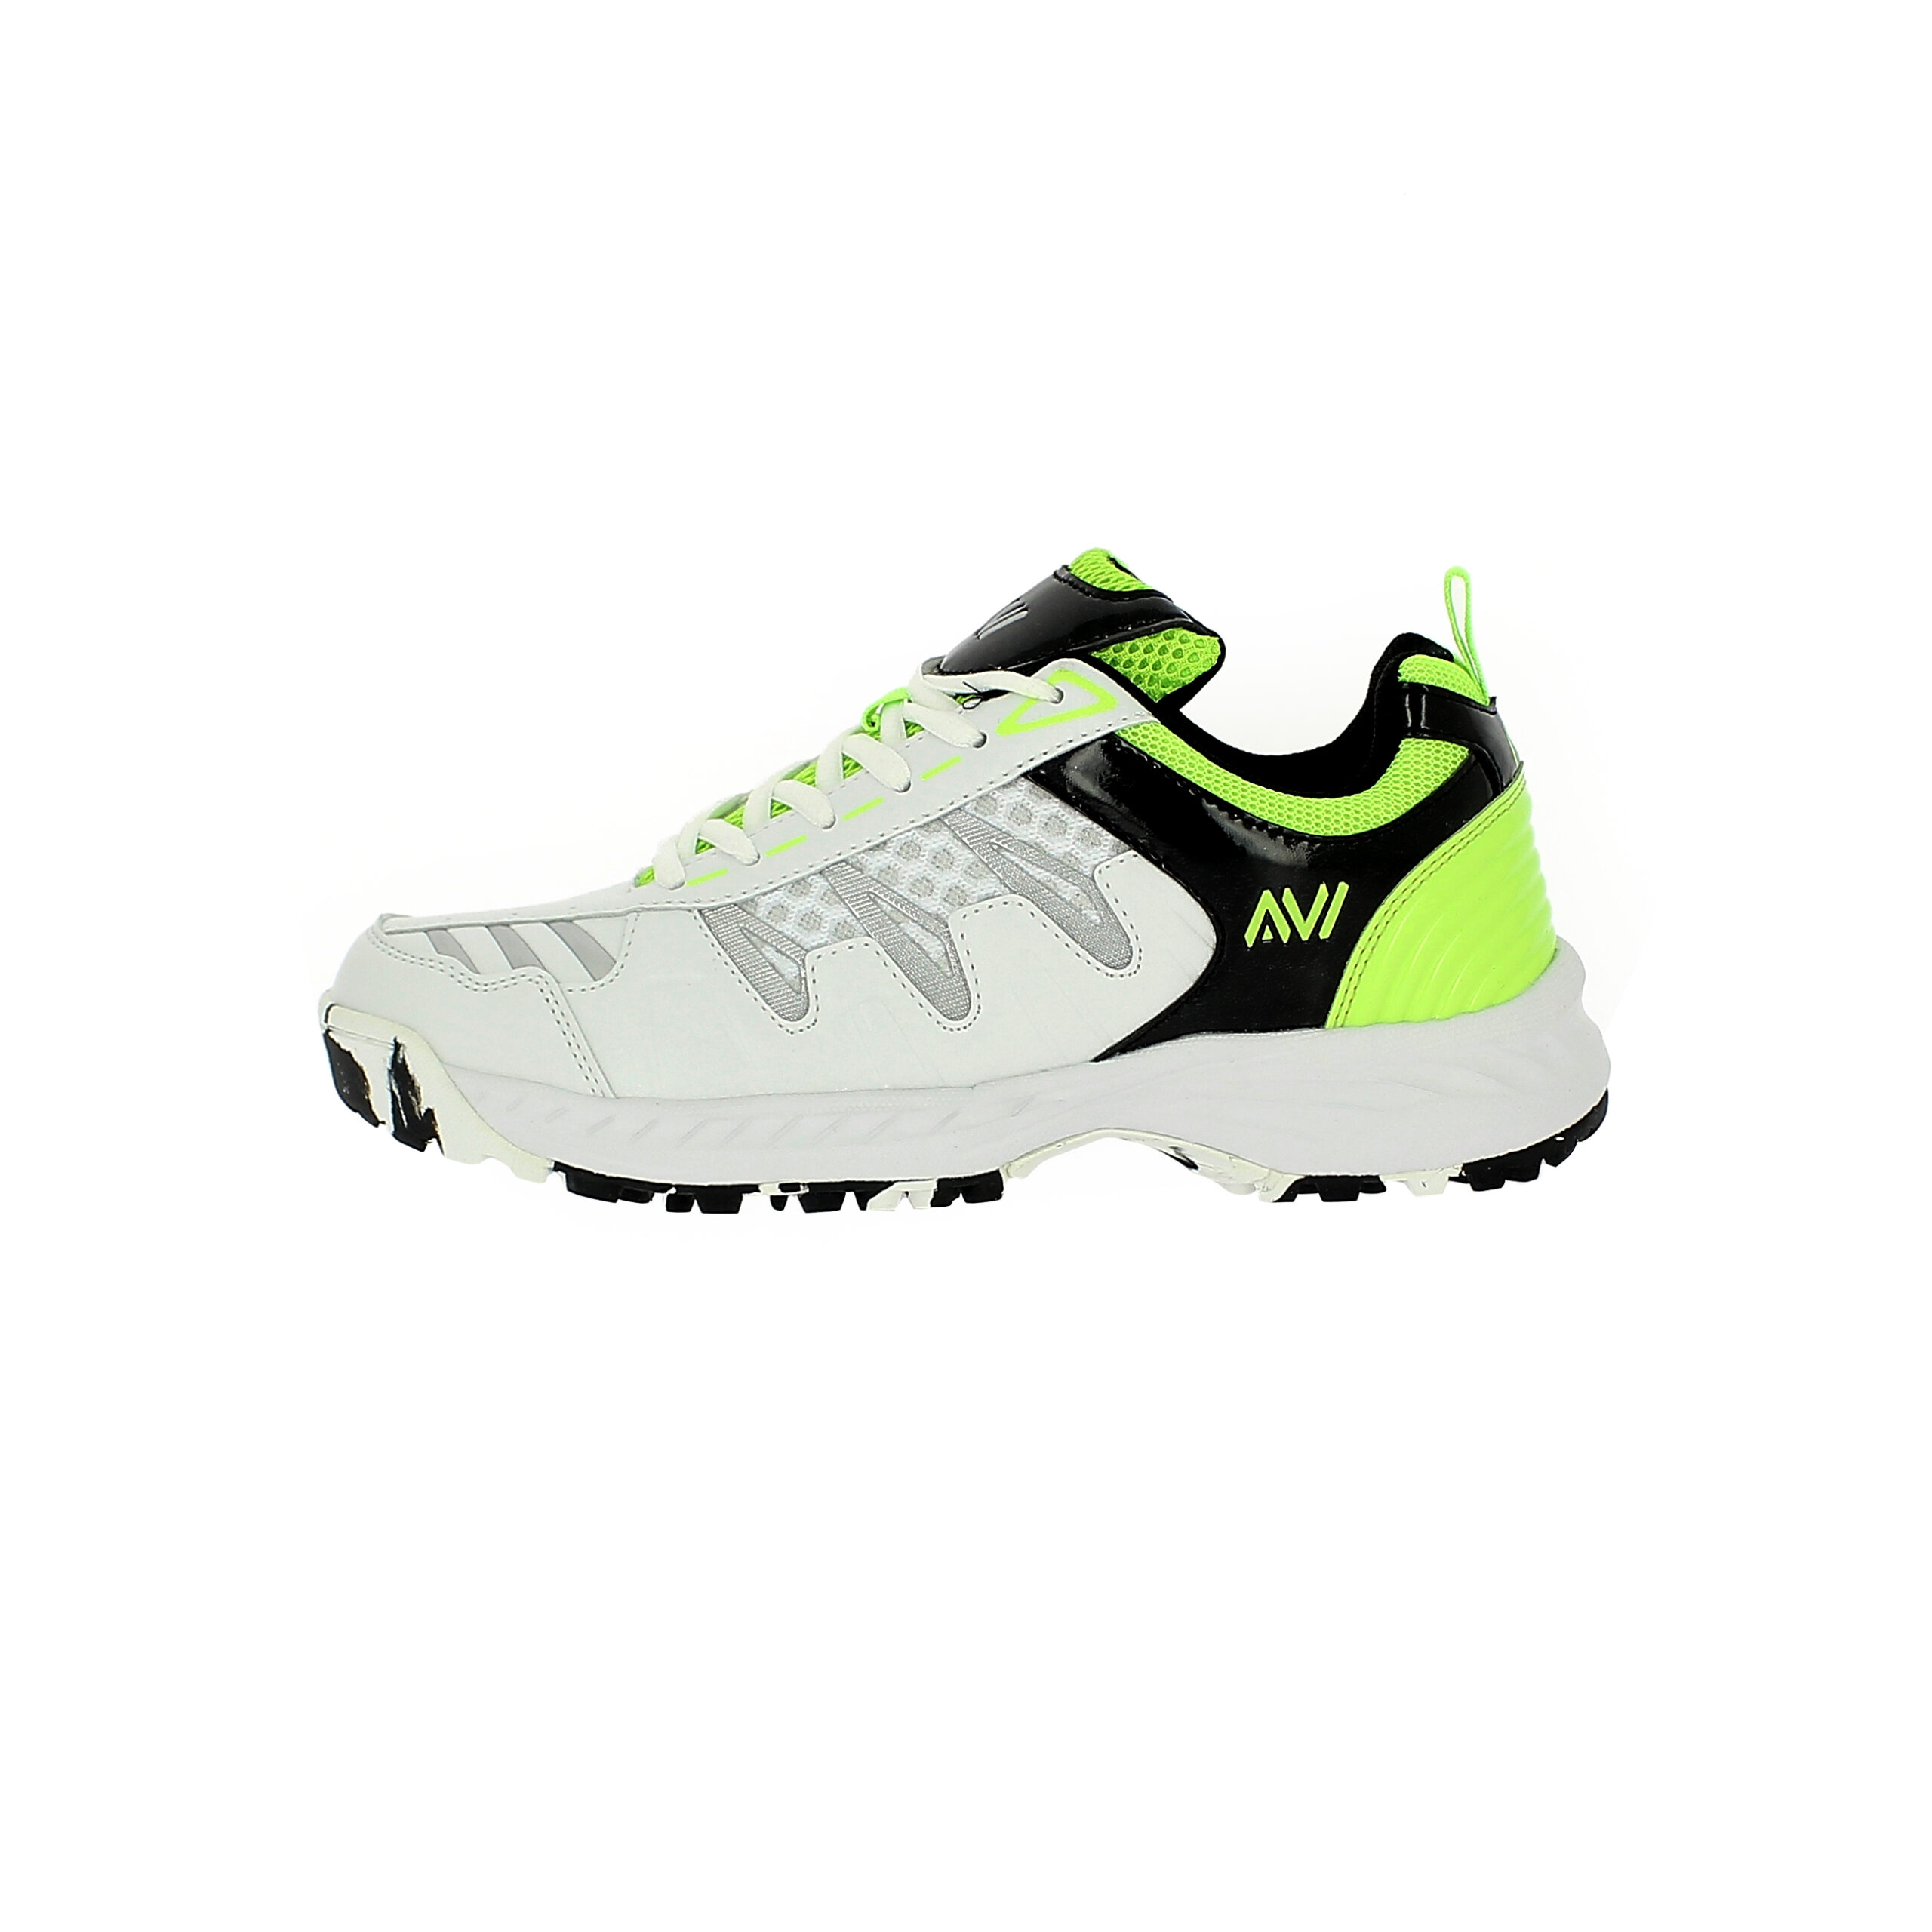 AVI Unisex LACING CRICKET Shoe WHITE/LIME | DSI Footcandy